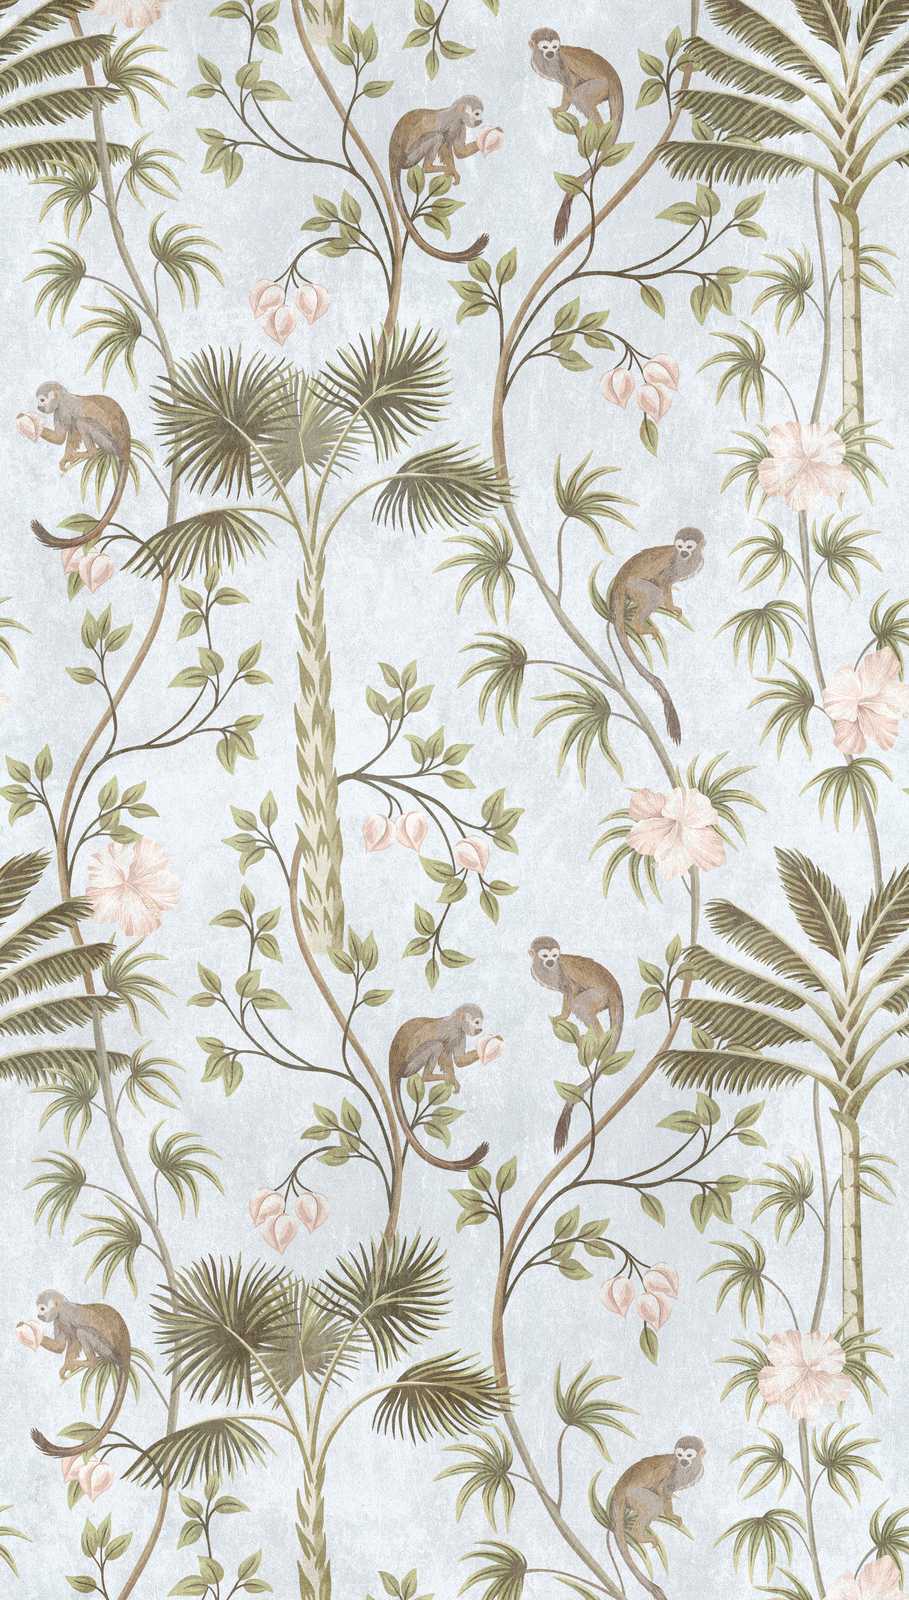             Wallpaper novelty | jungle wallpaper with palm trees & monkeys motif
        